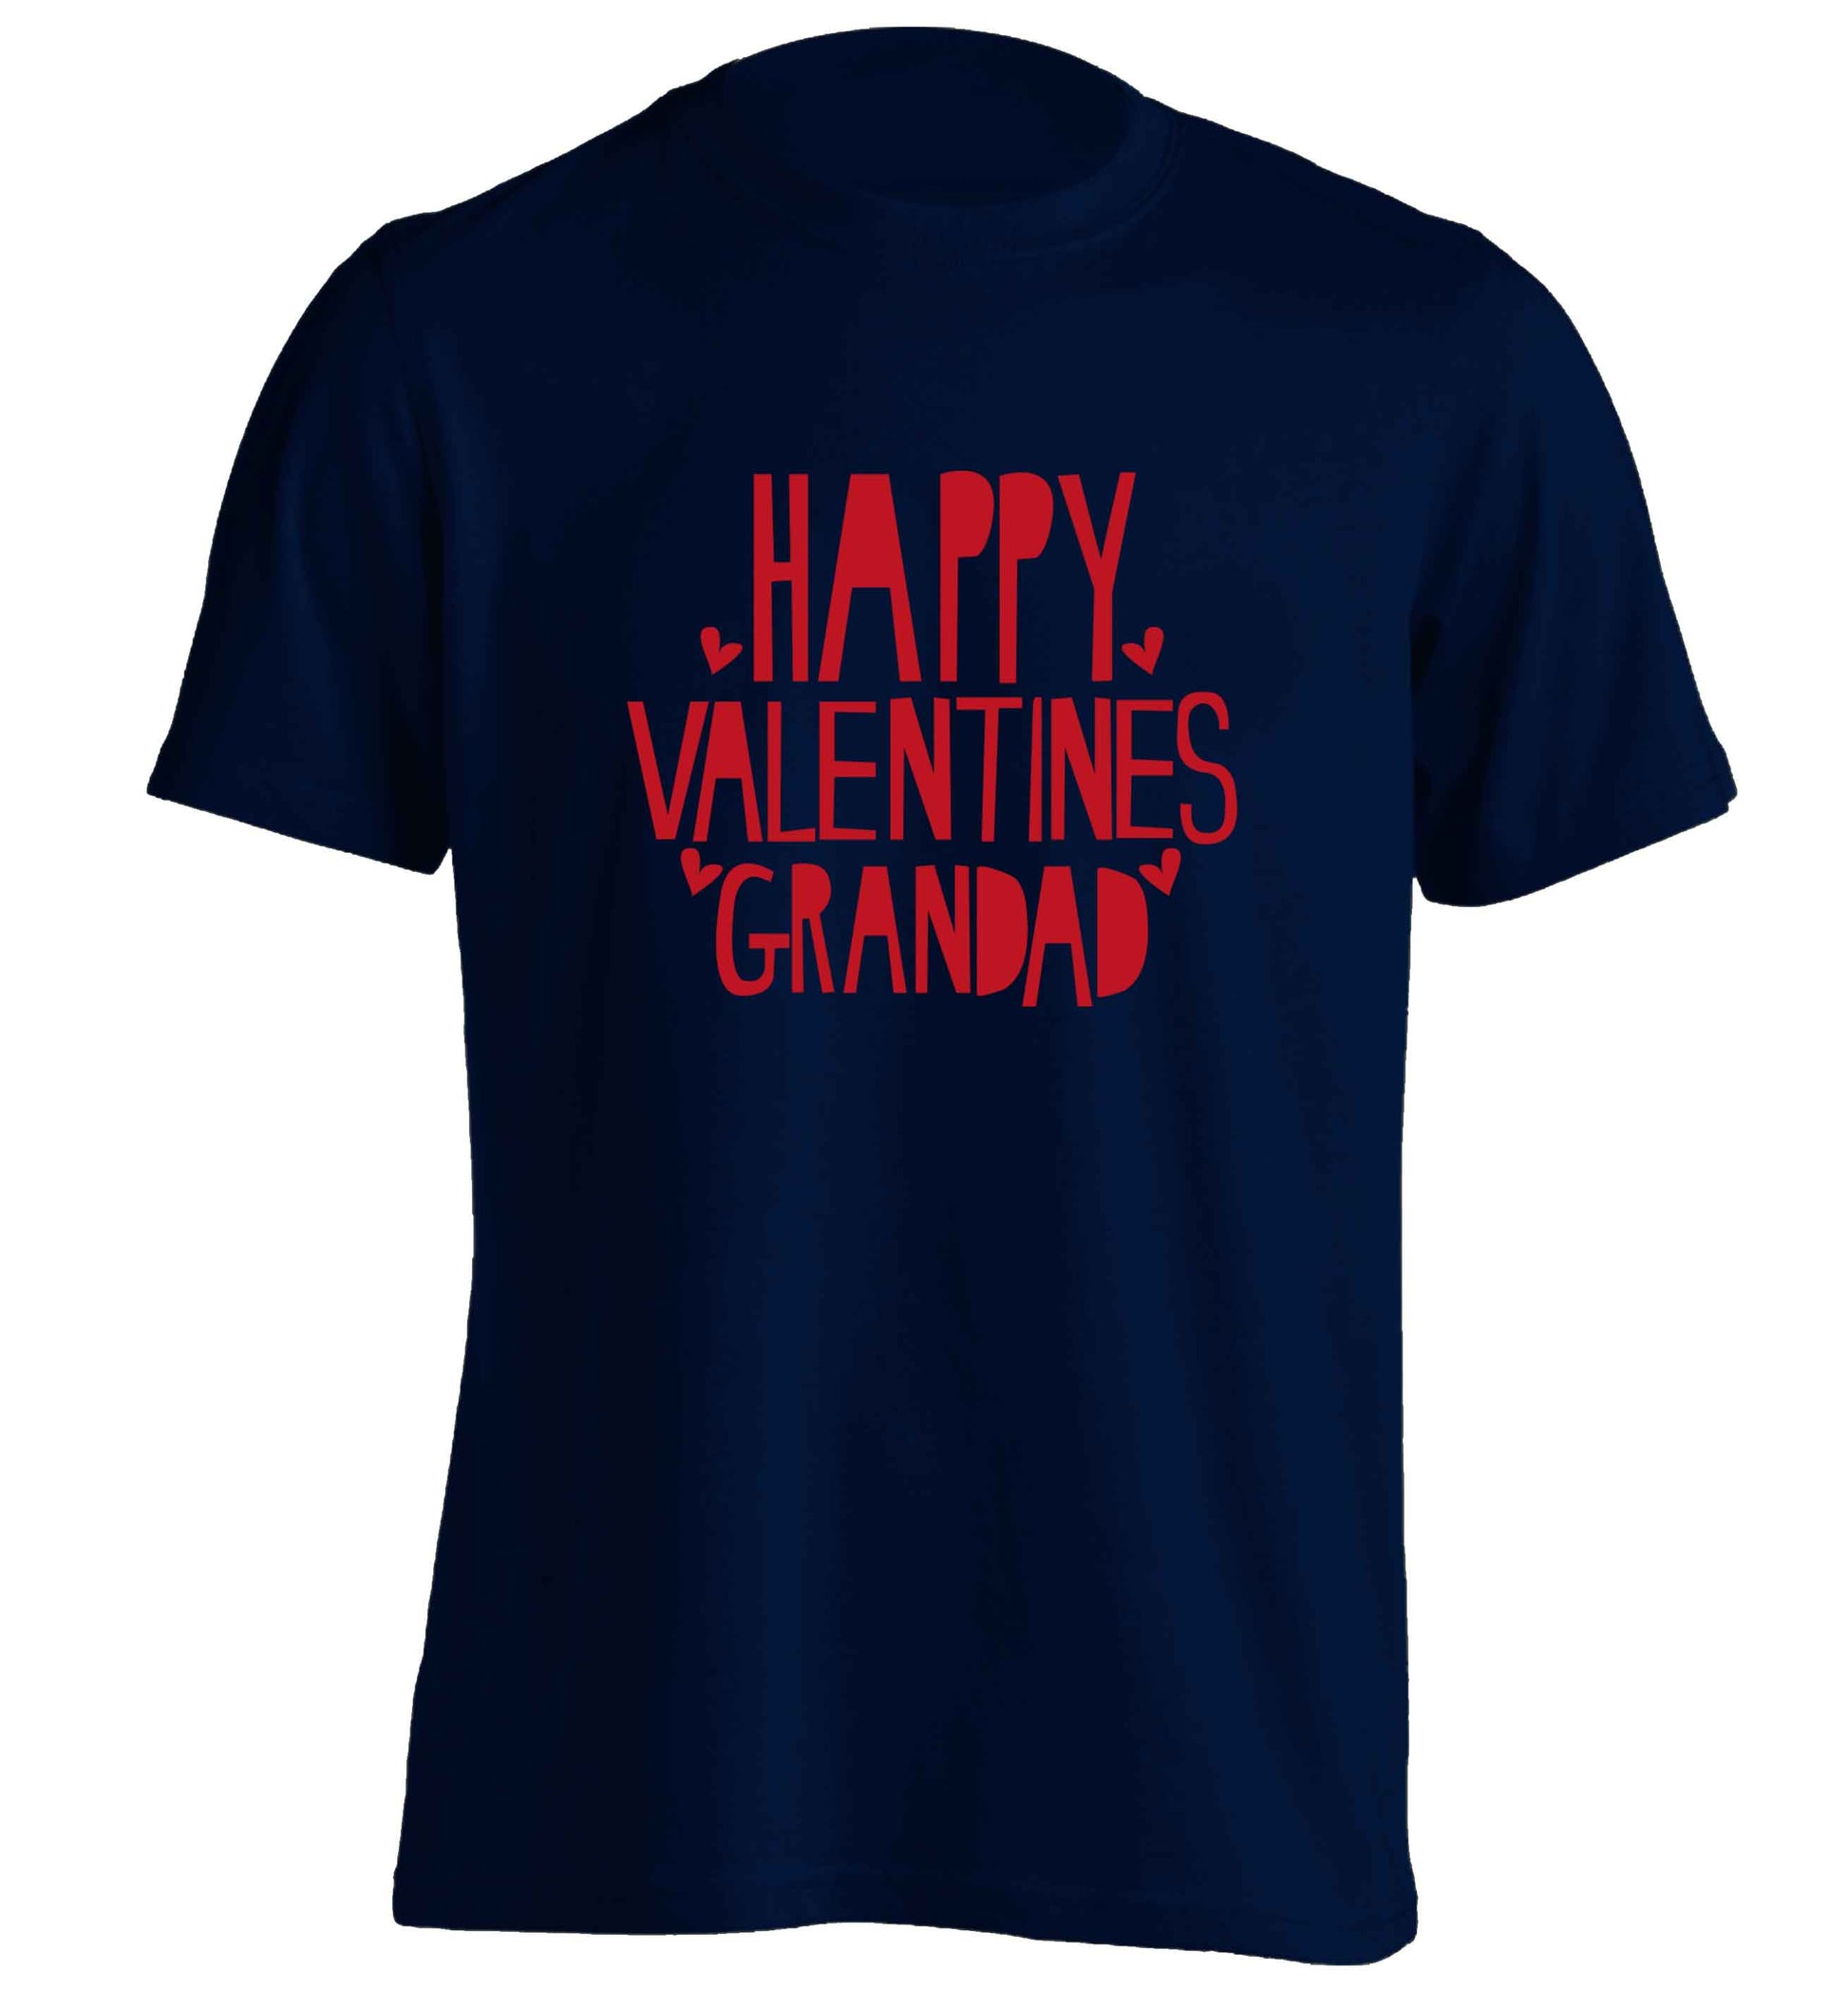 Happy valentines grandad adults unisex navy Tshirt 2XL